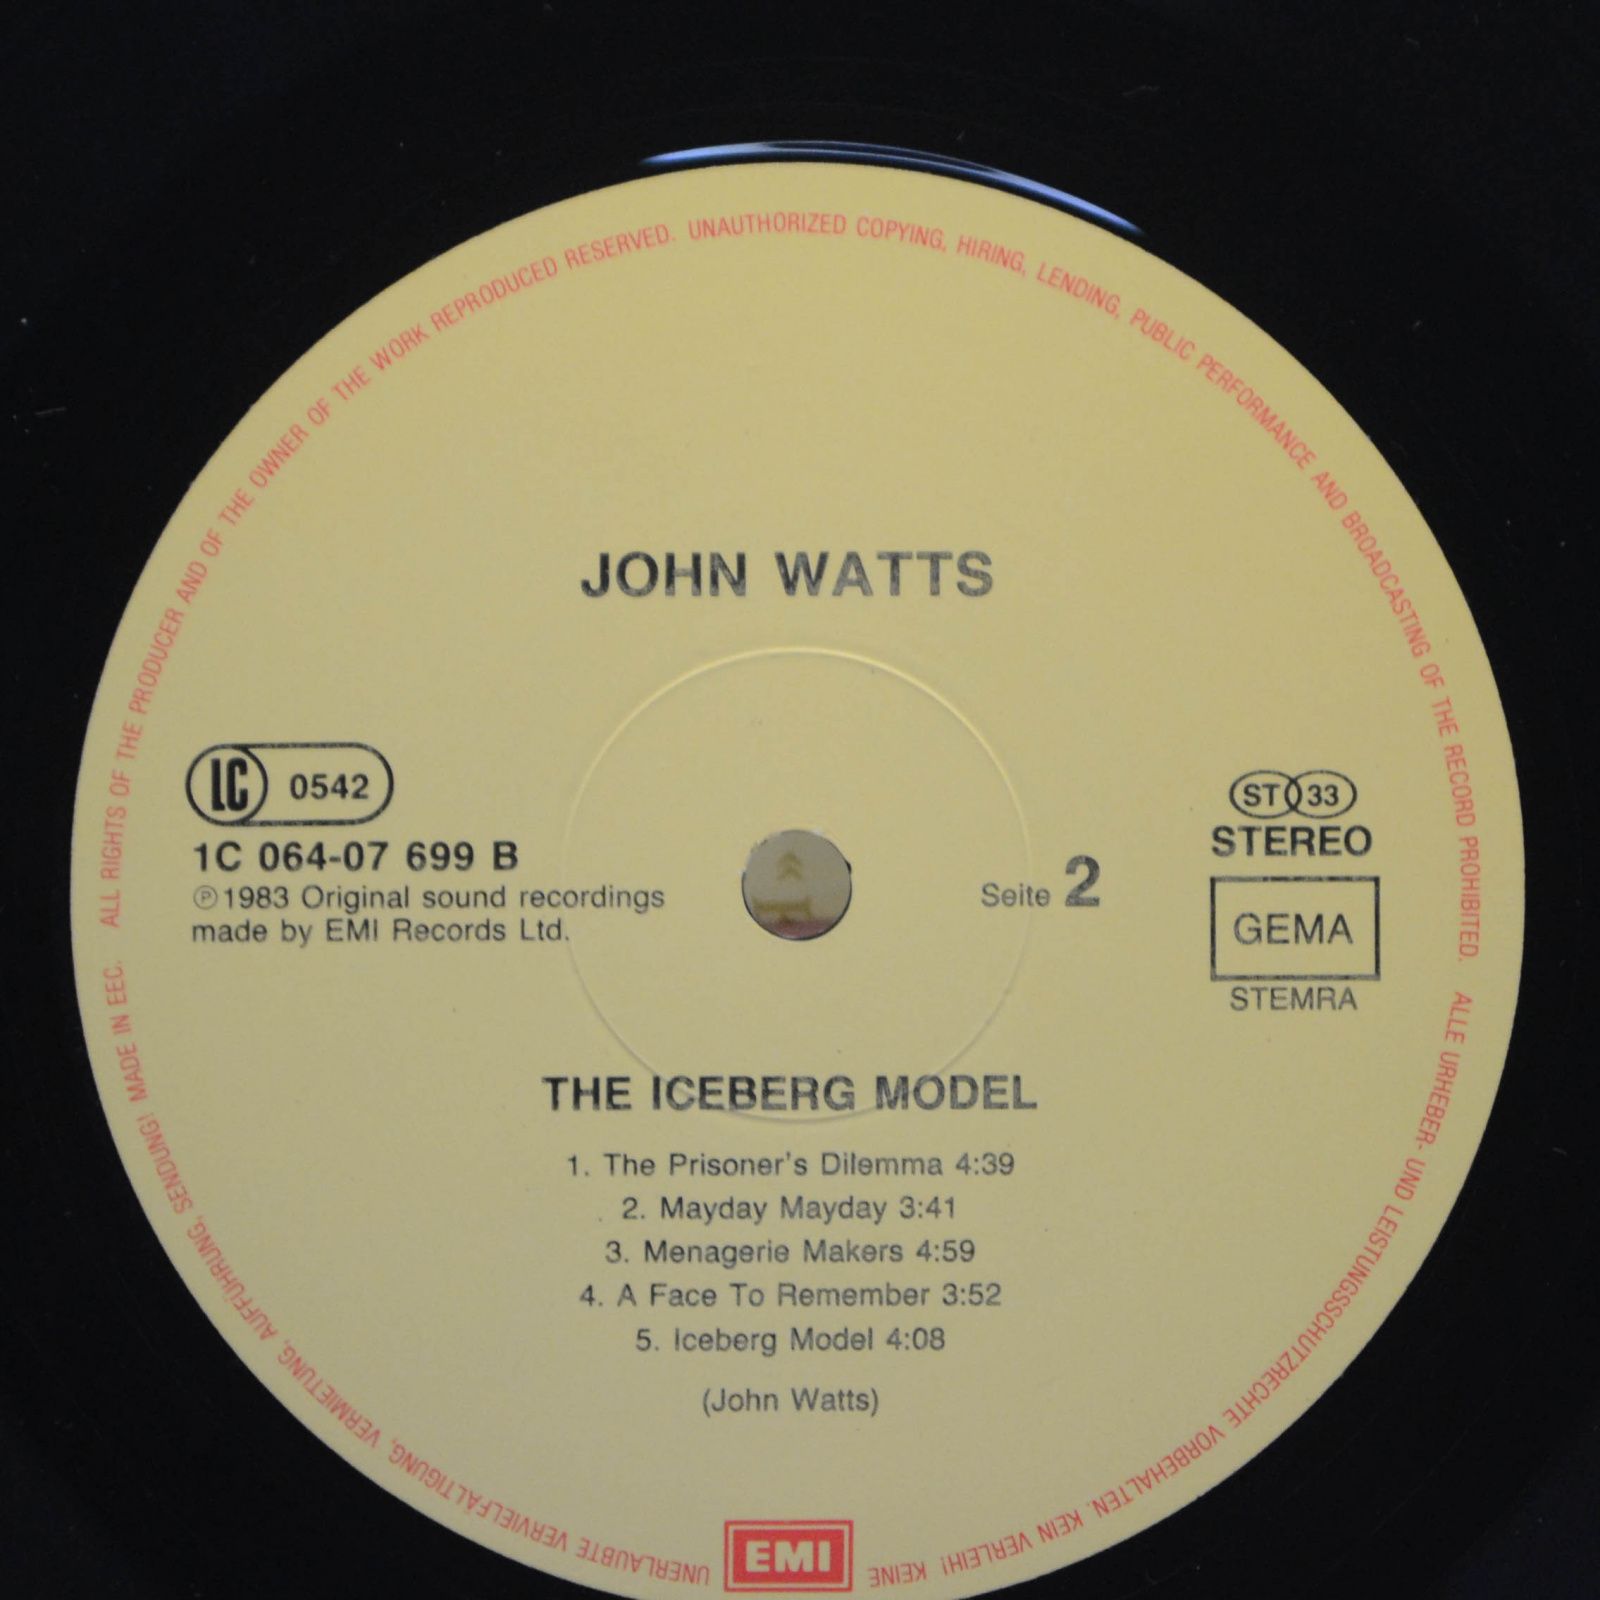 John Watts — The Iceberg Model, 1983